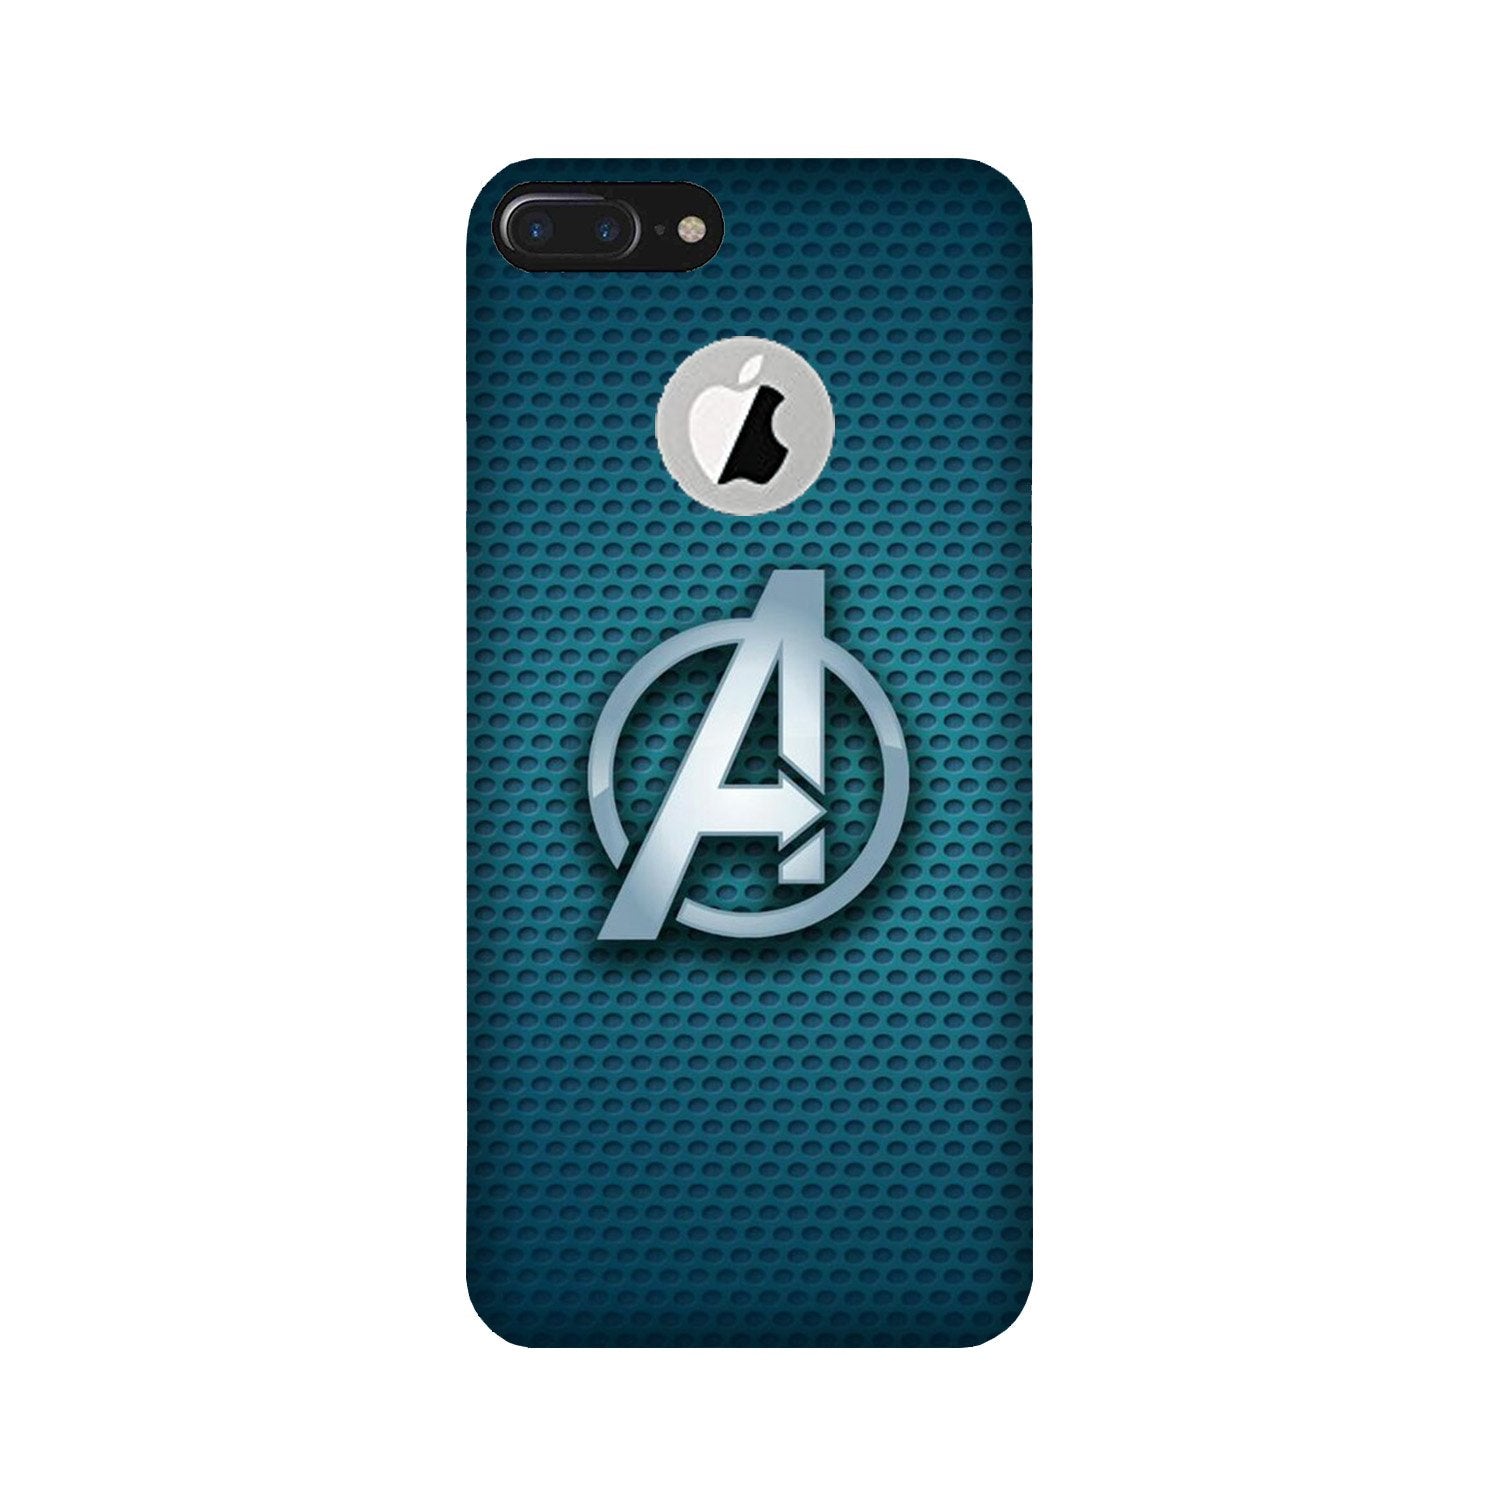 Avengers Case for iPhone 7 Plus logo cut (Design No. 246)